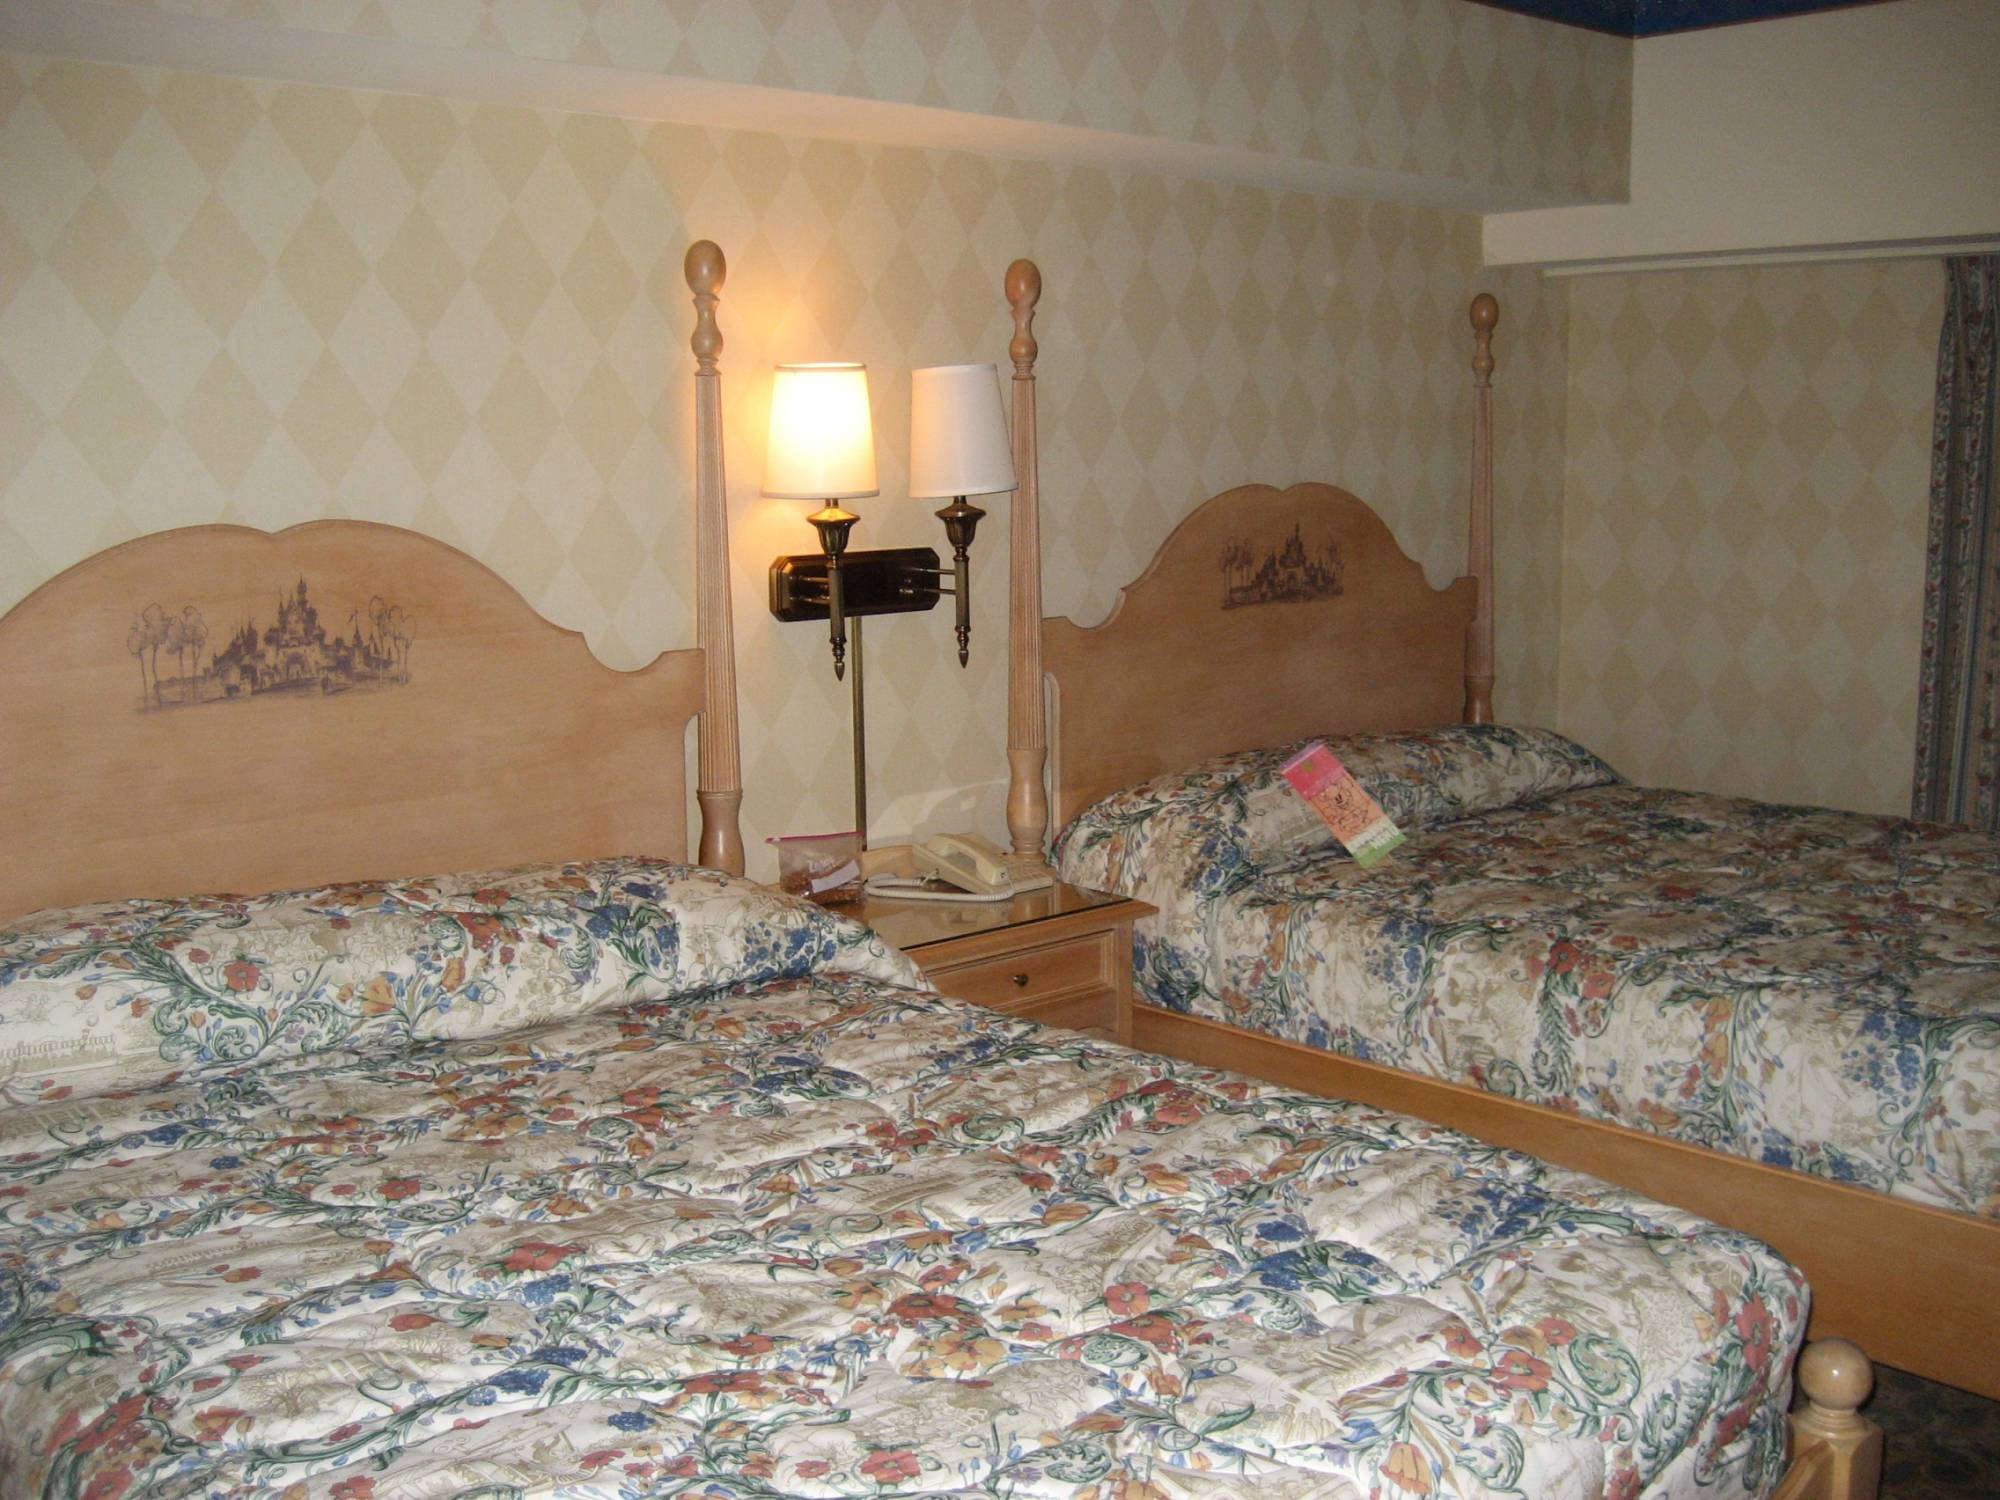 Disneyland Hotel - Guest Room Bed